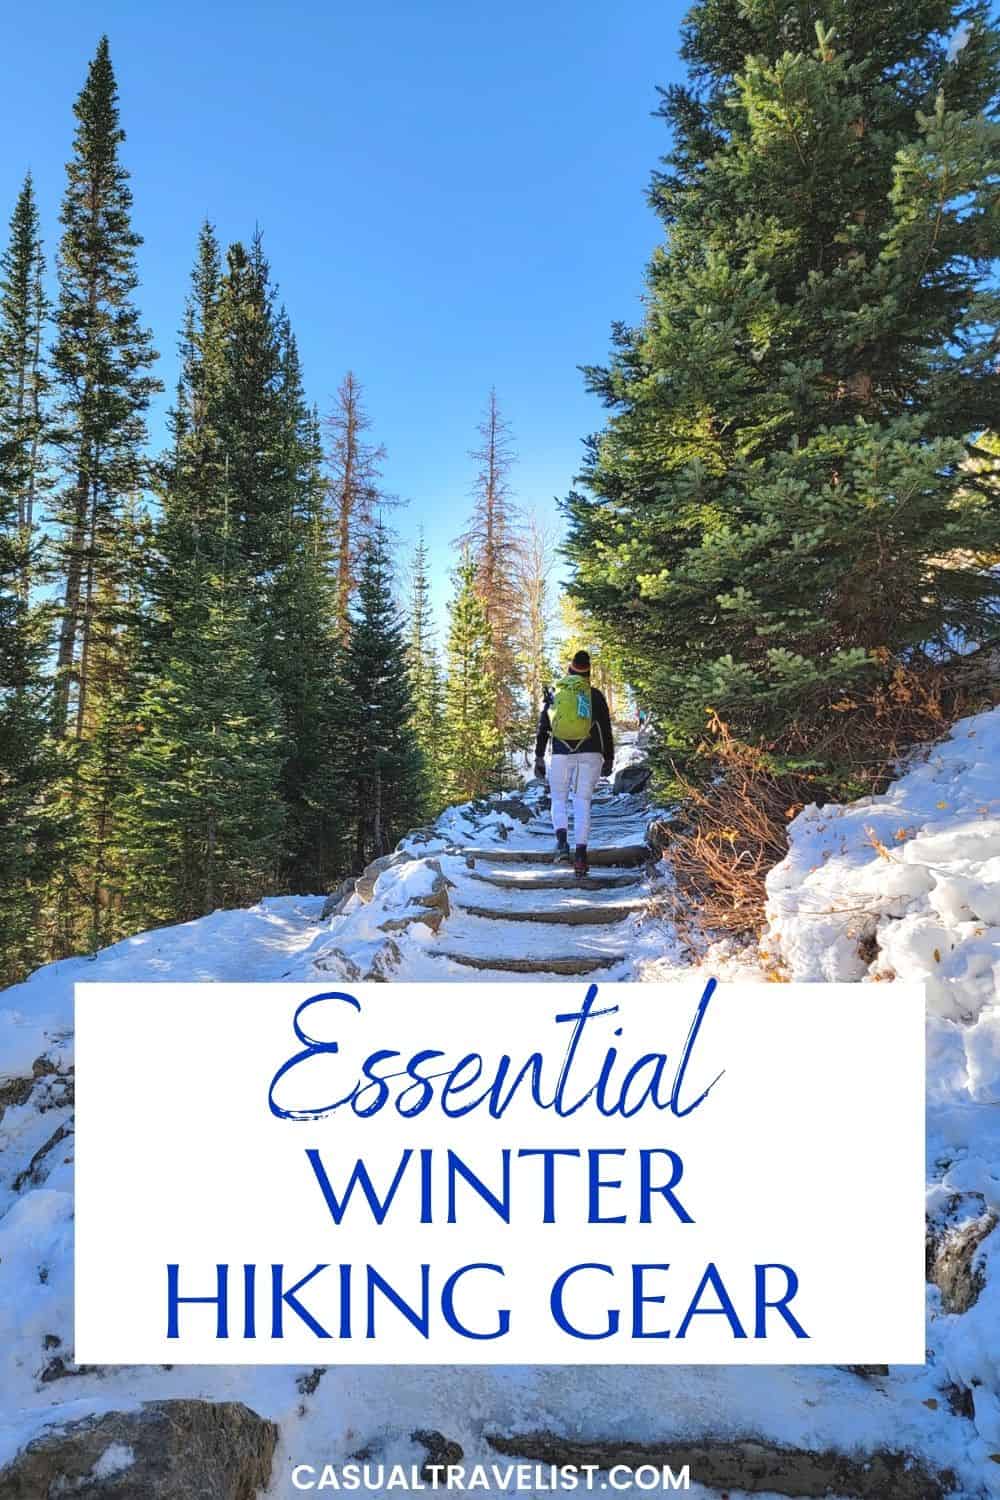 Essential Winter Hiking Gear - Casual Travelist